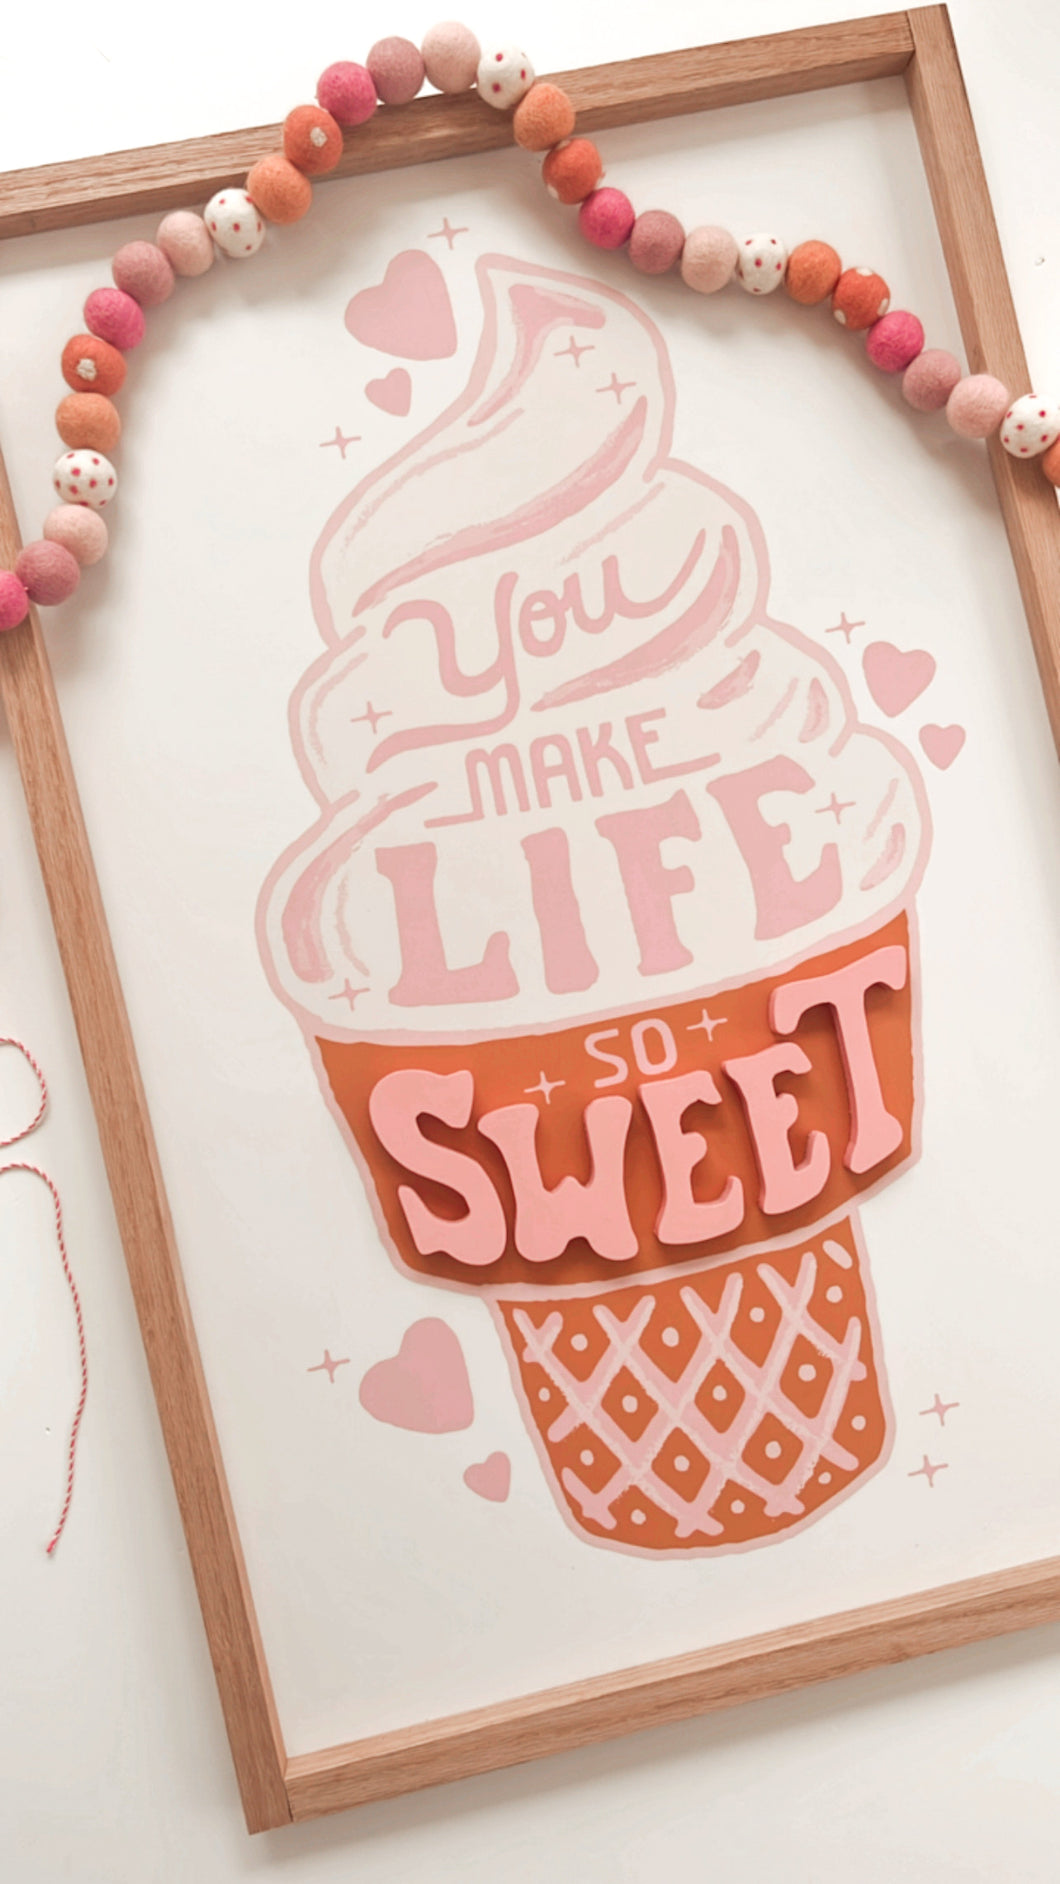 You make life sweet